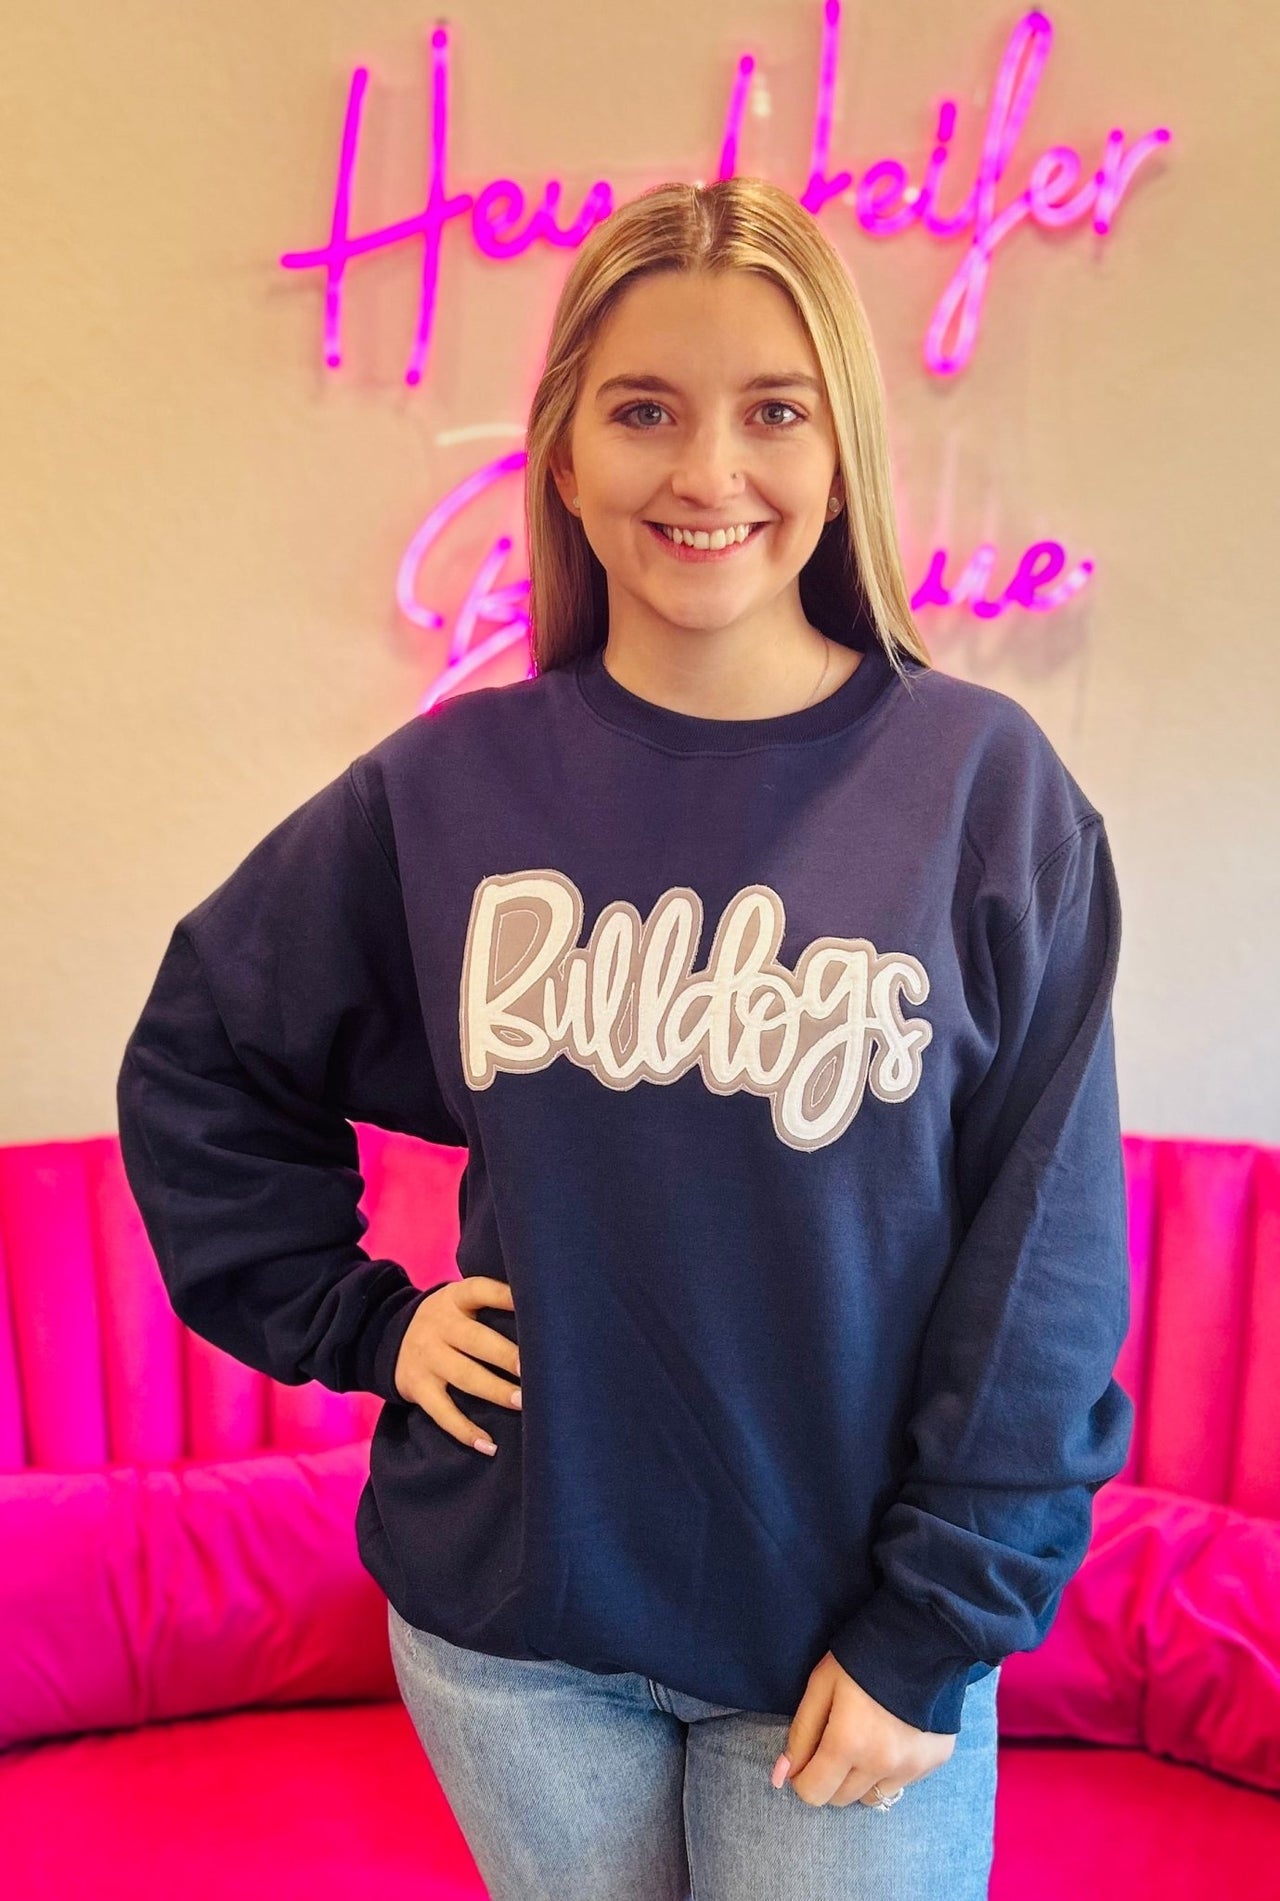 Bulldog Sweatshirt - Hey Heifer Boutique